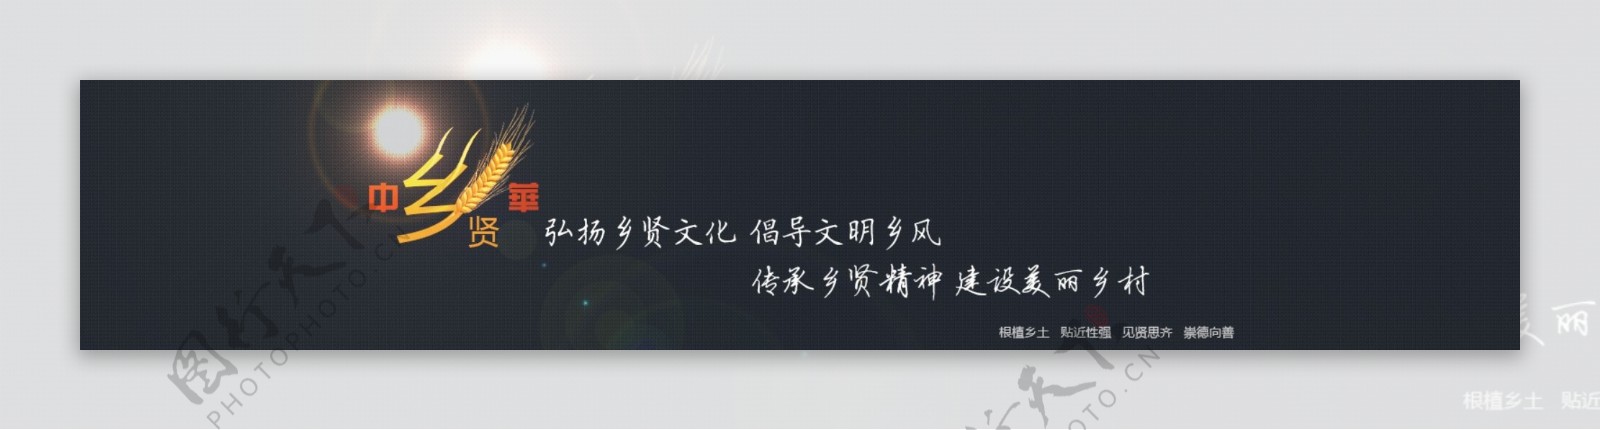 中华乡贤banner图片